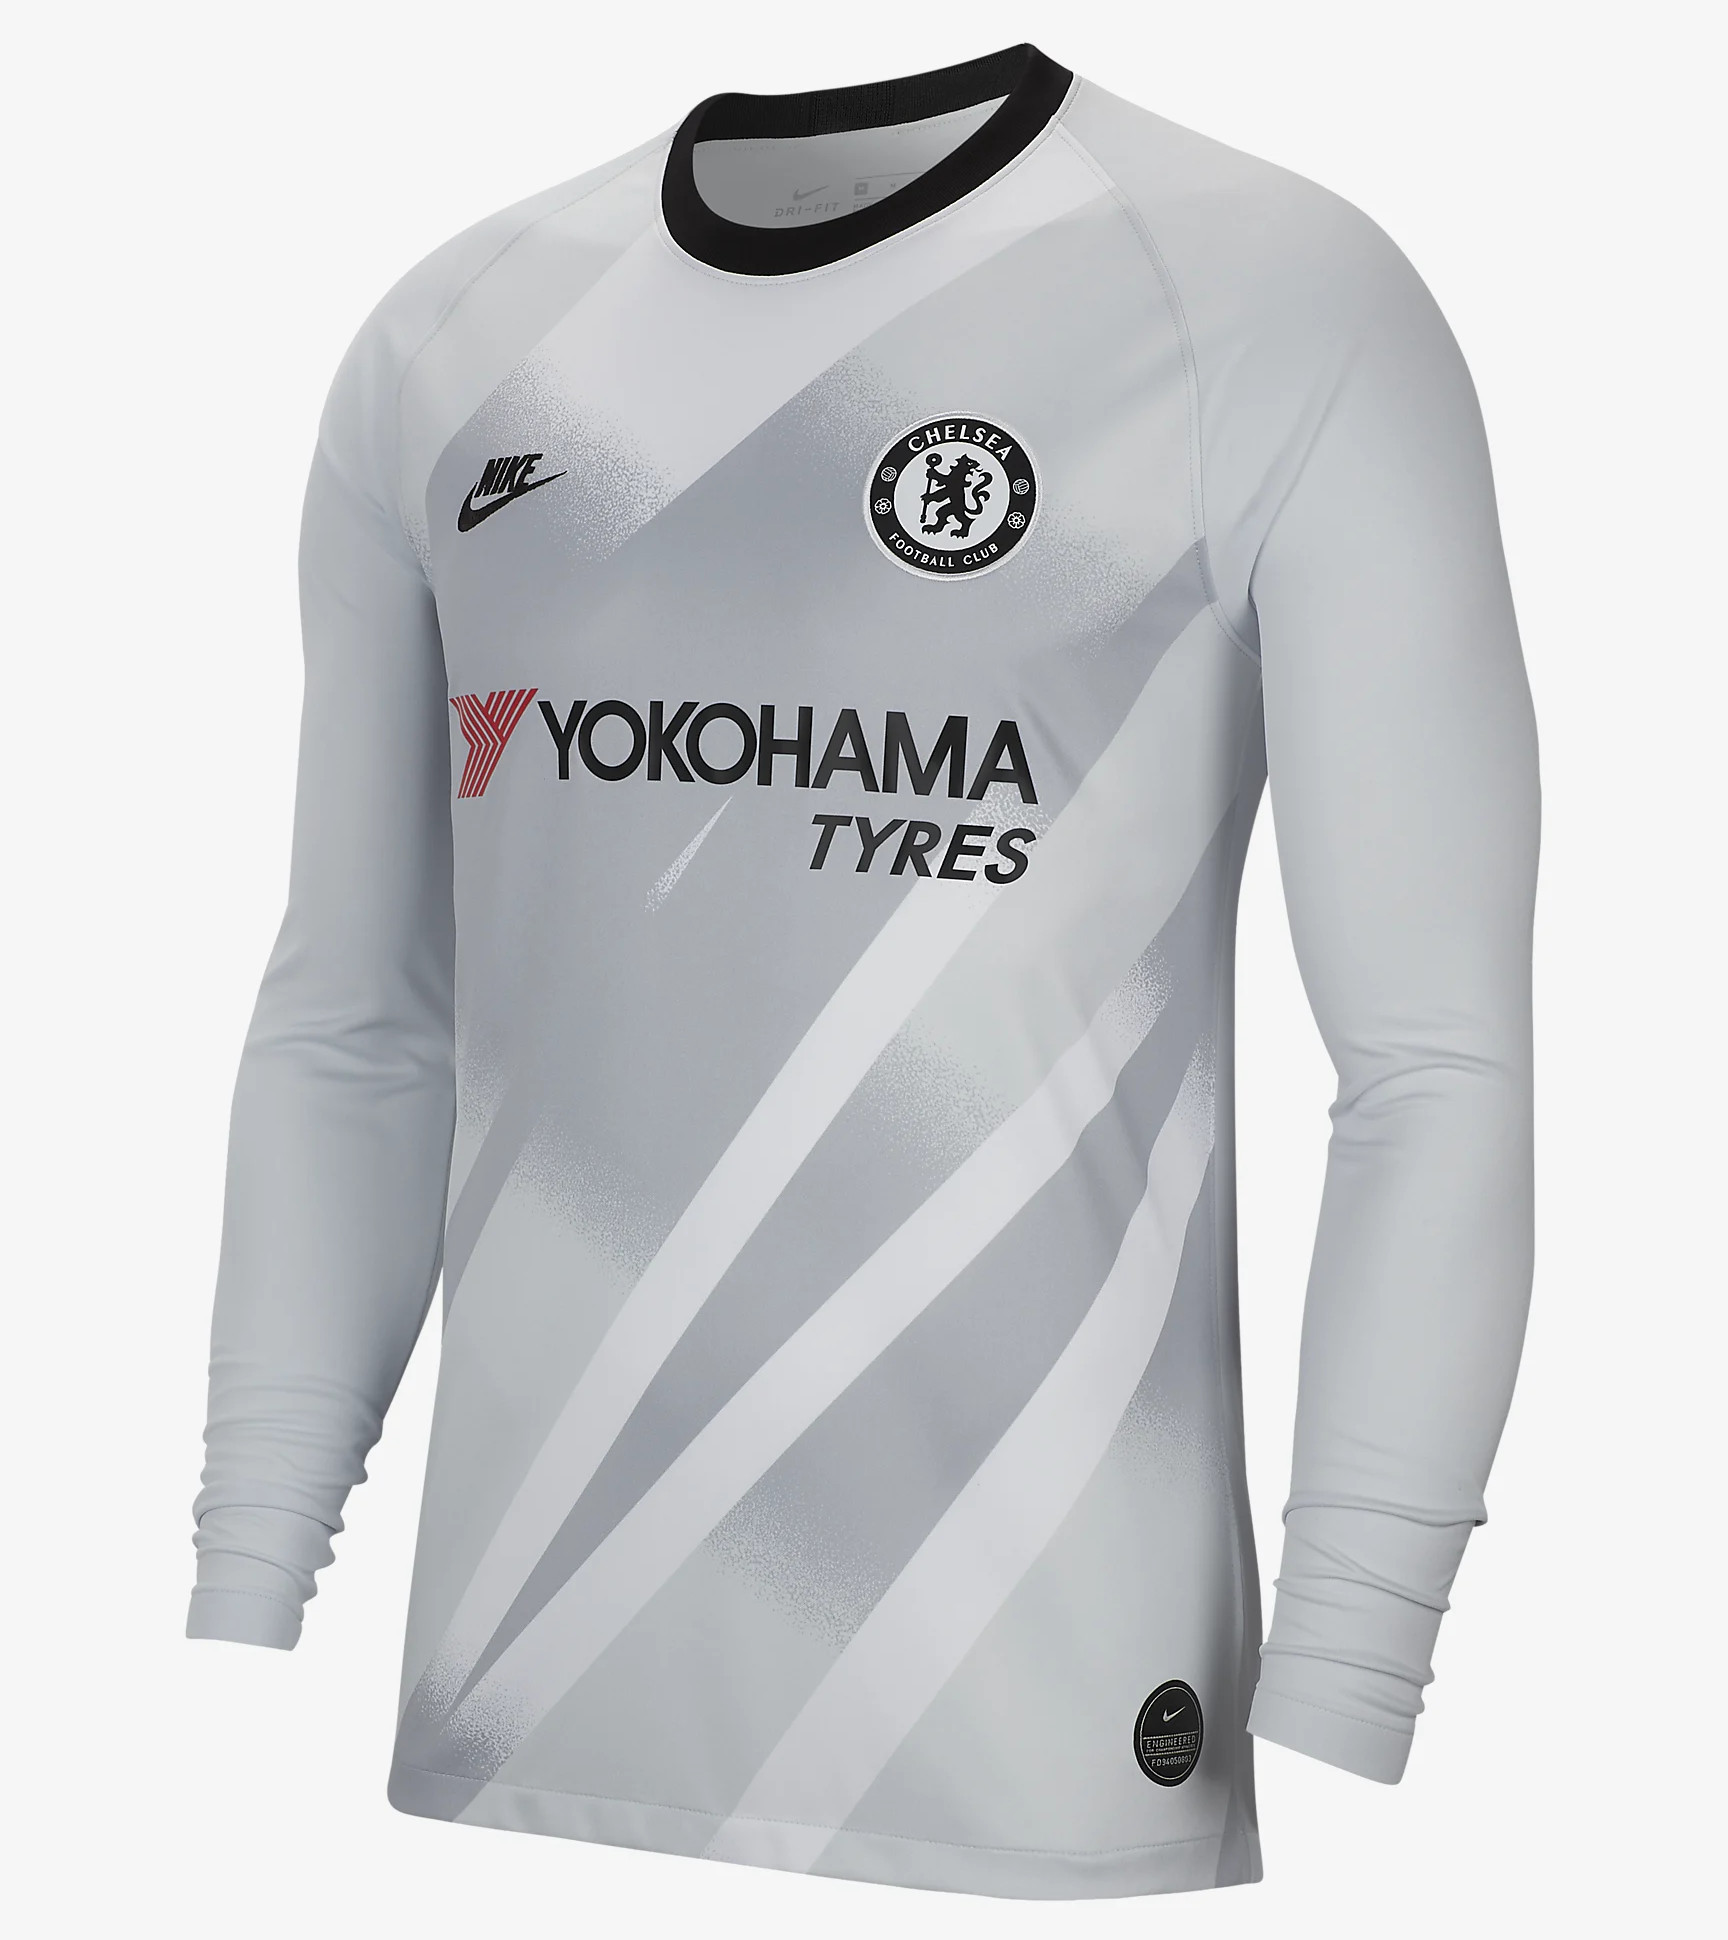 vloot bundel Dij Chelsea keepersshirt Champions League 2019-2020 - Voetbalshirts.com